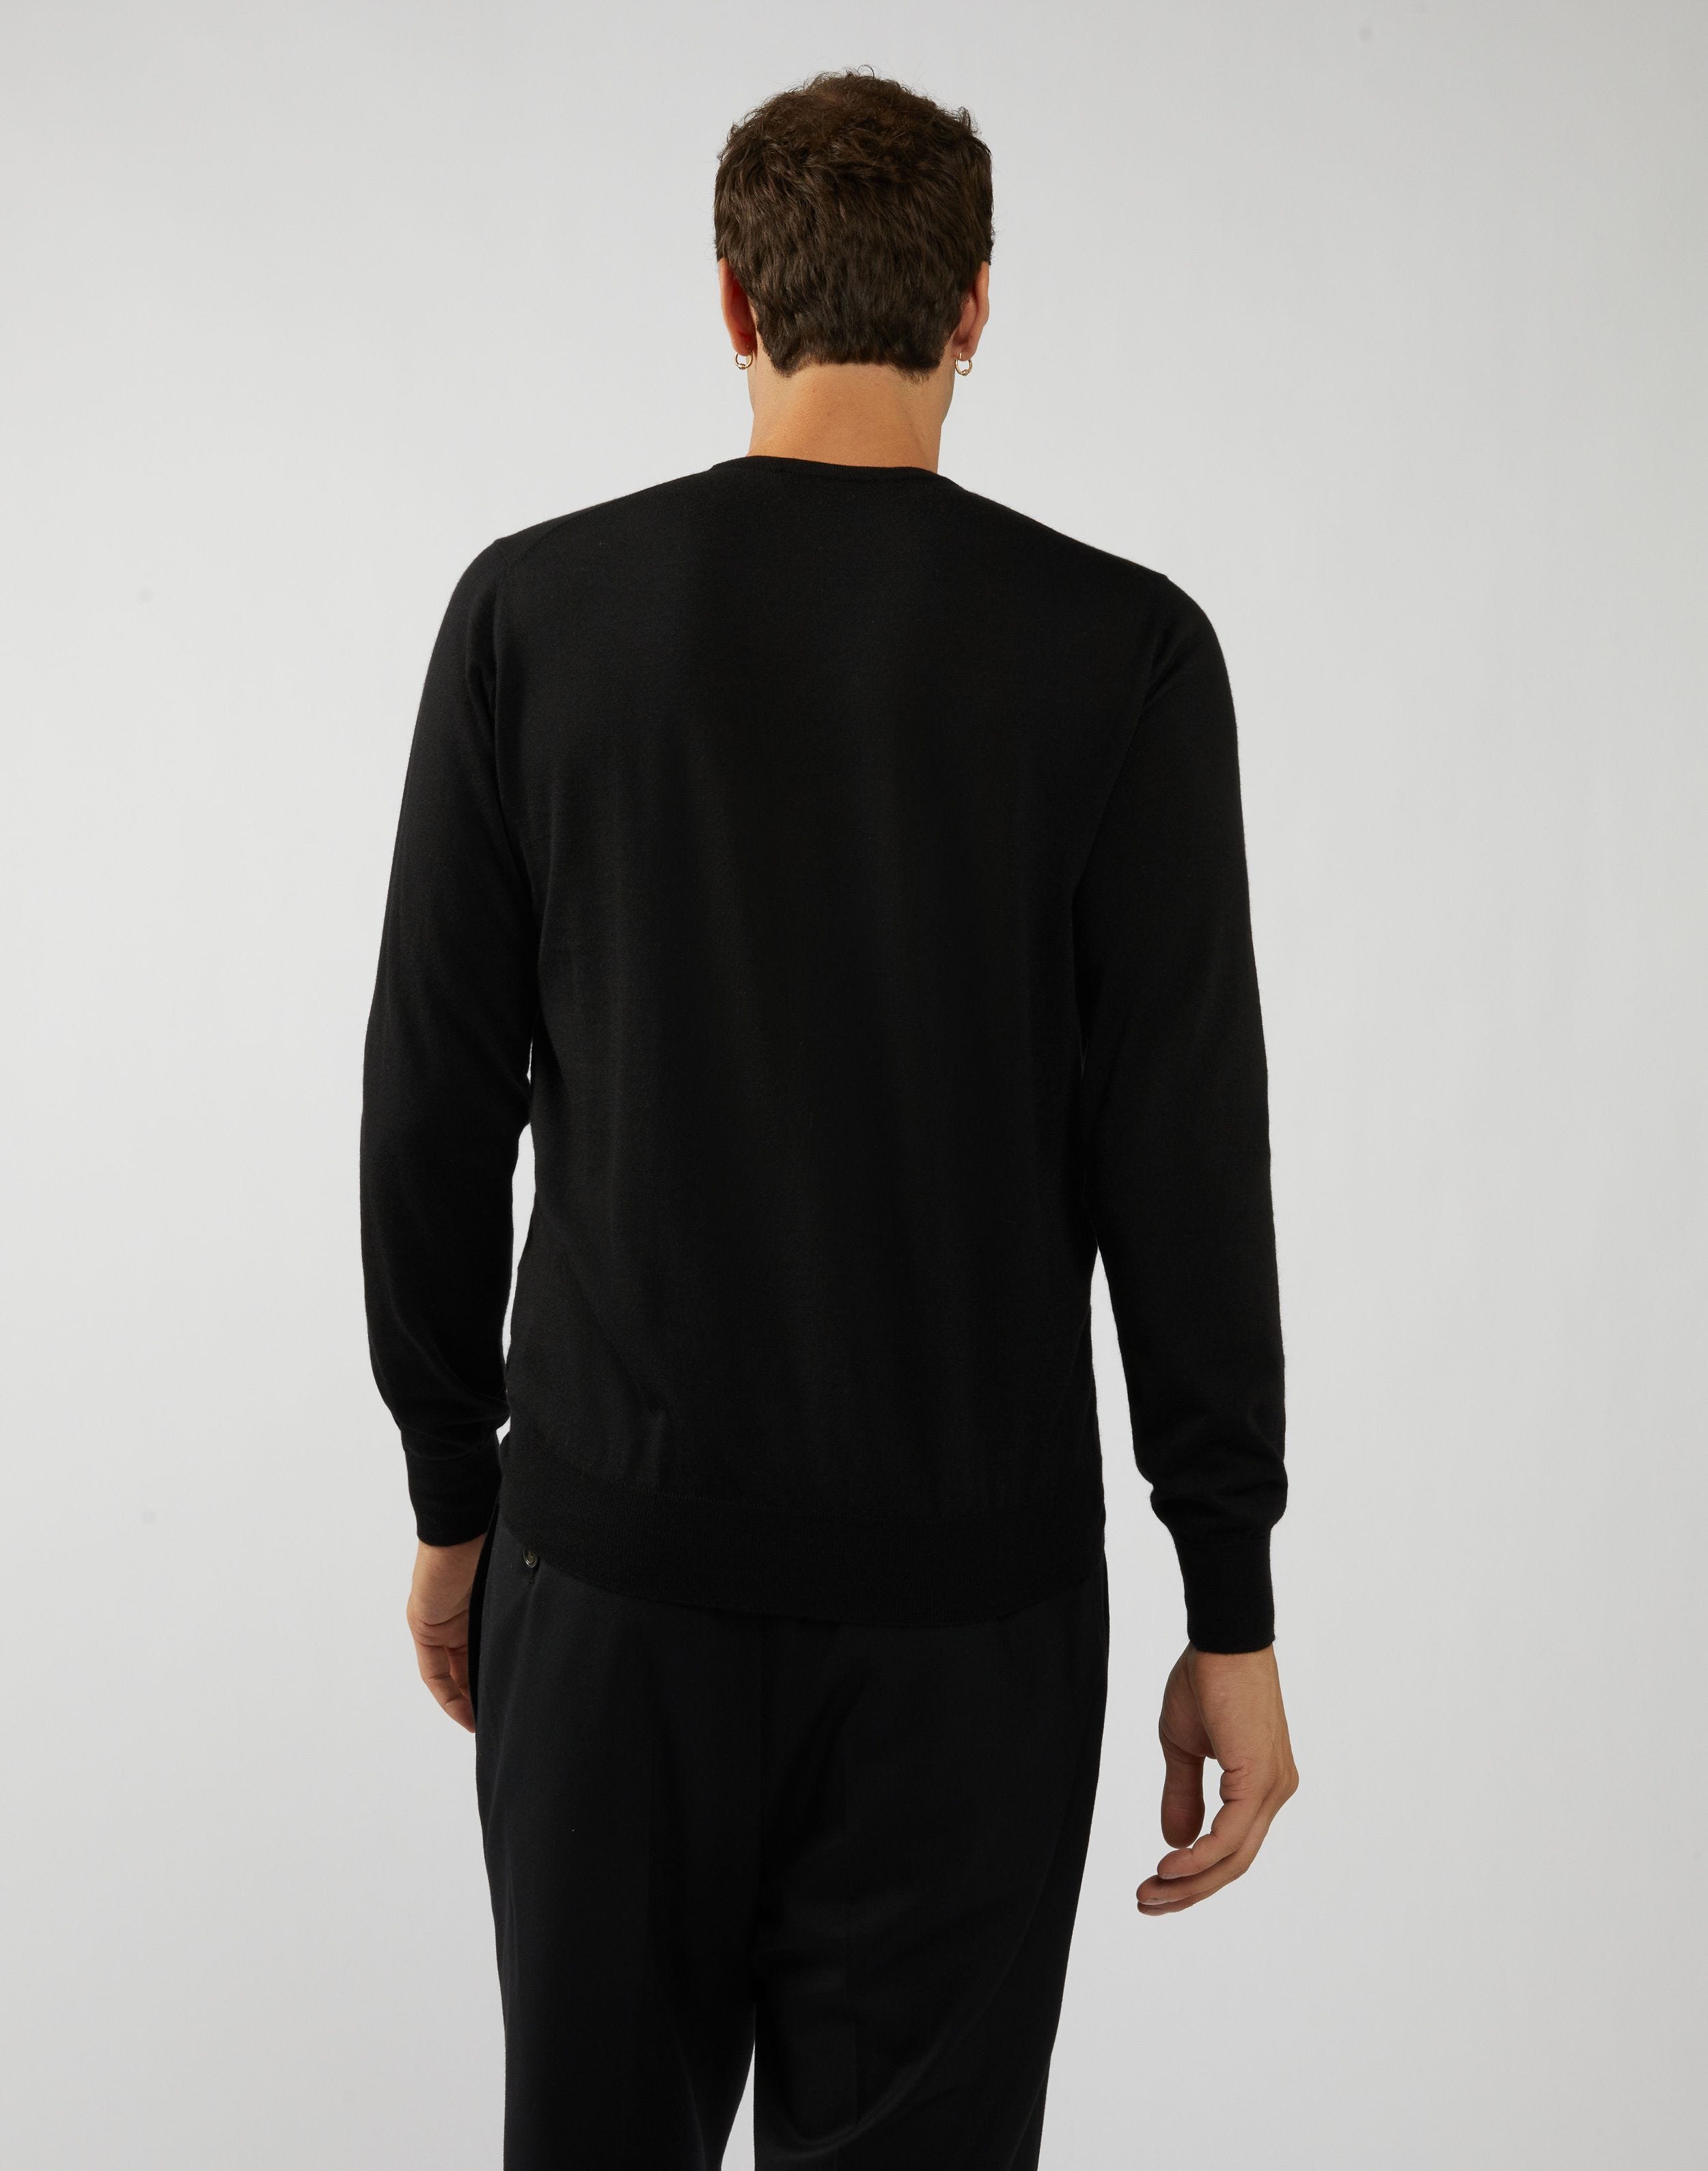 Round-neck stockinette-stitch sweater in black cashmere and silk